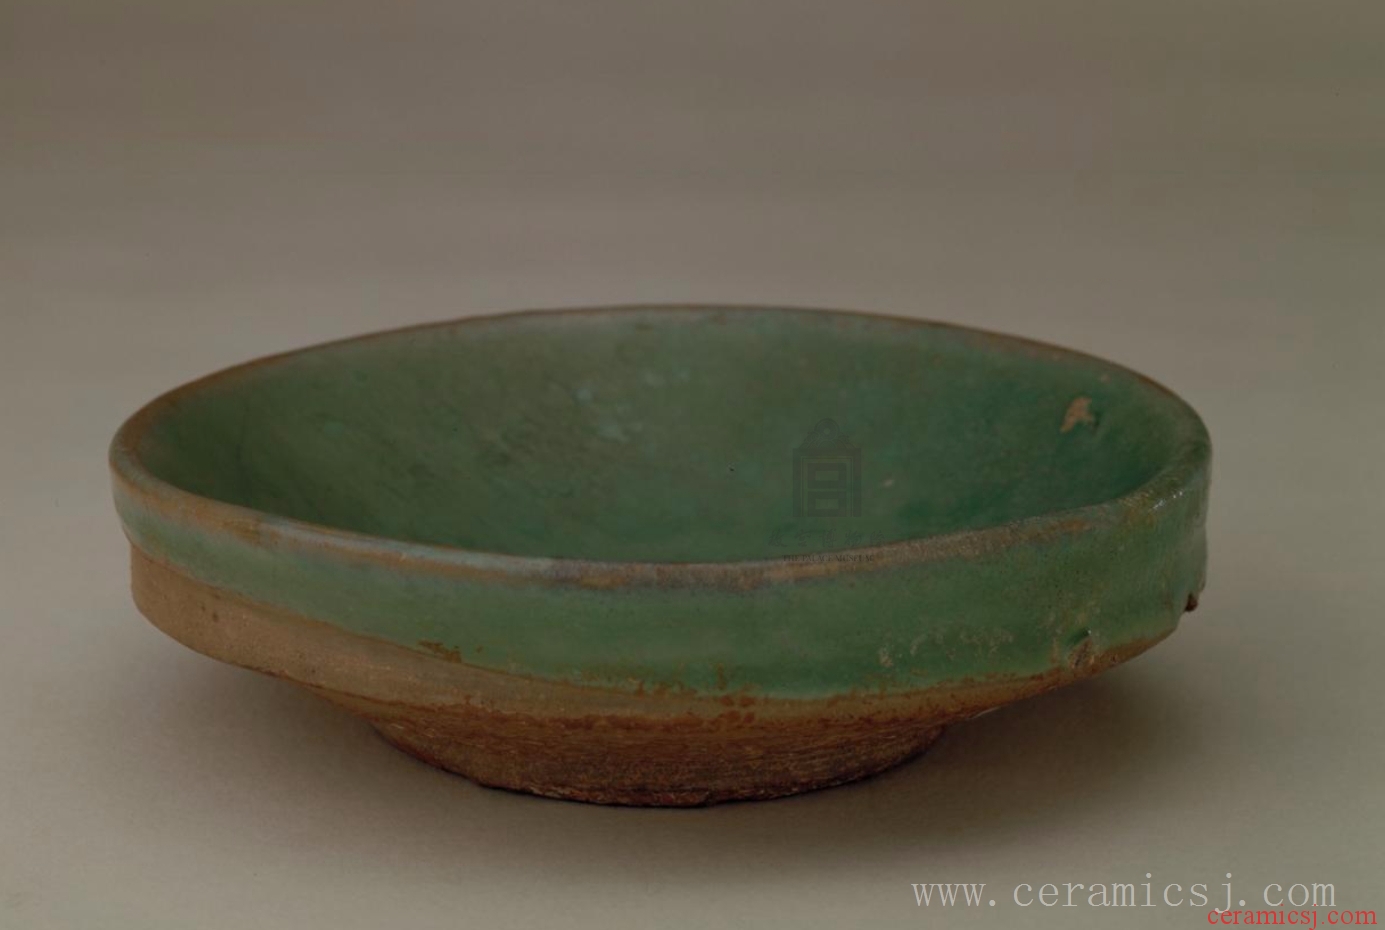 Kiln: Qiong kiln  Period: Tang dynasty (618-907)  Date: undated 